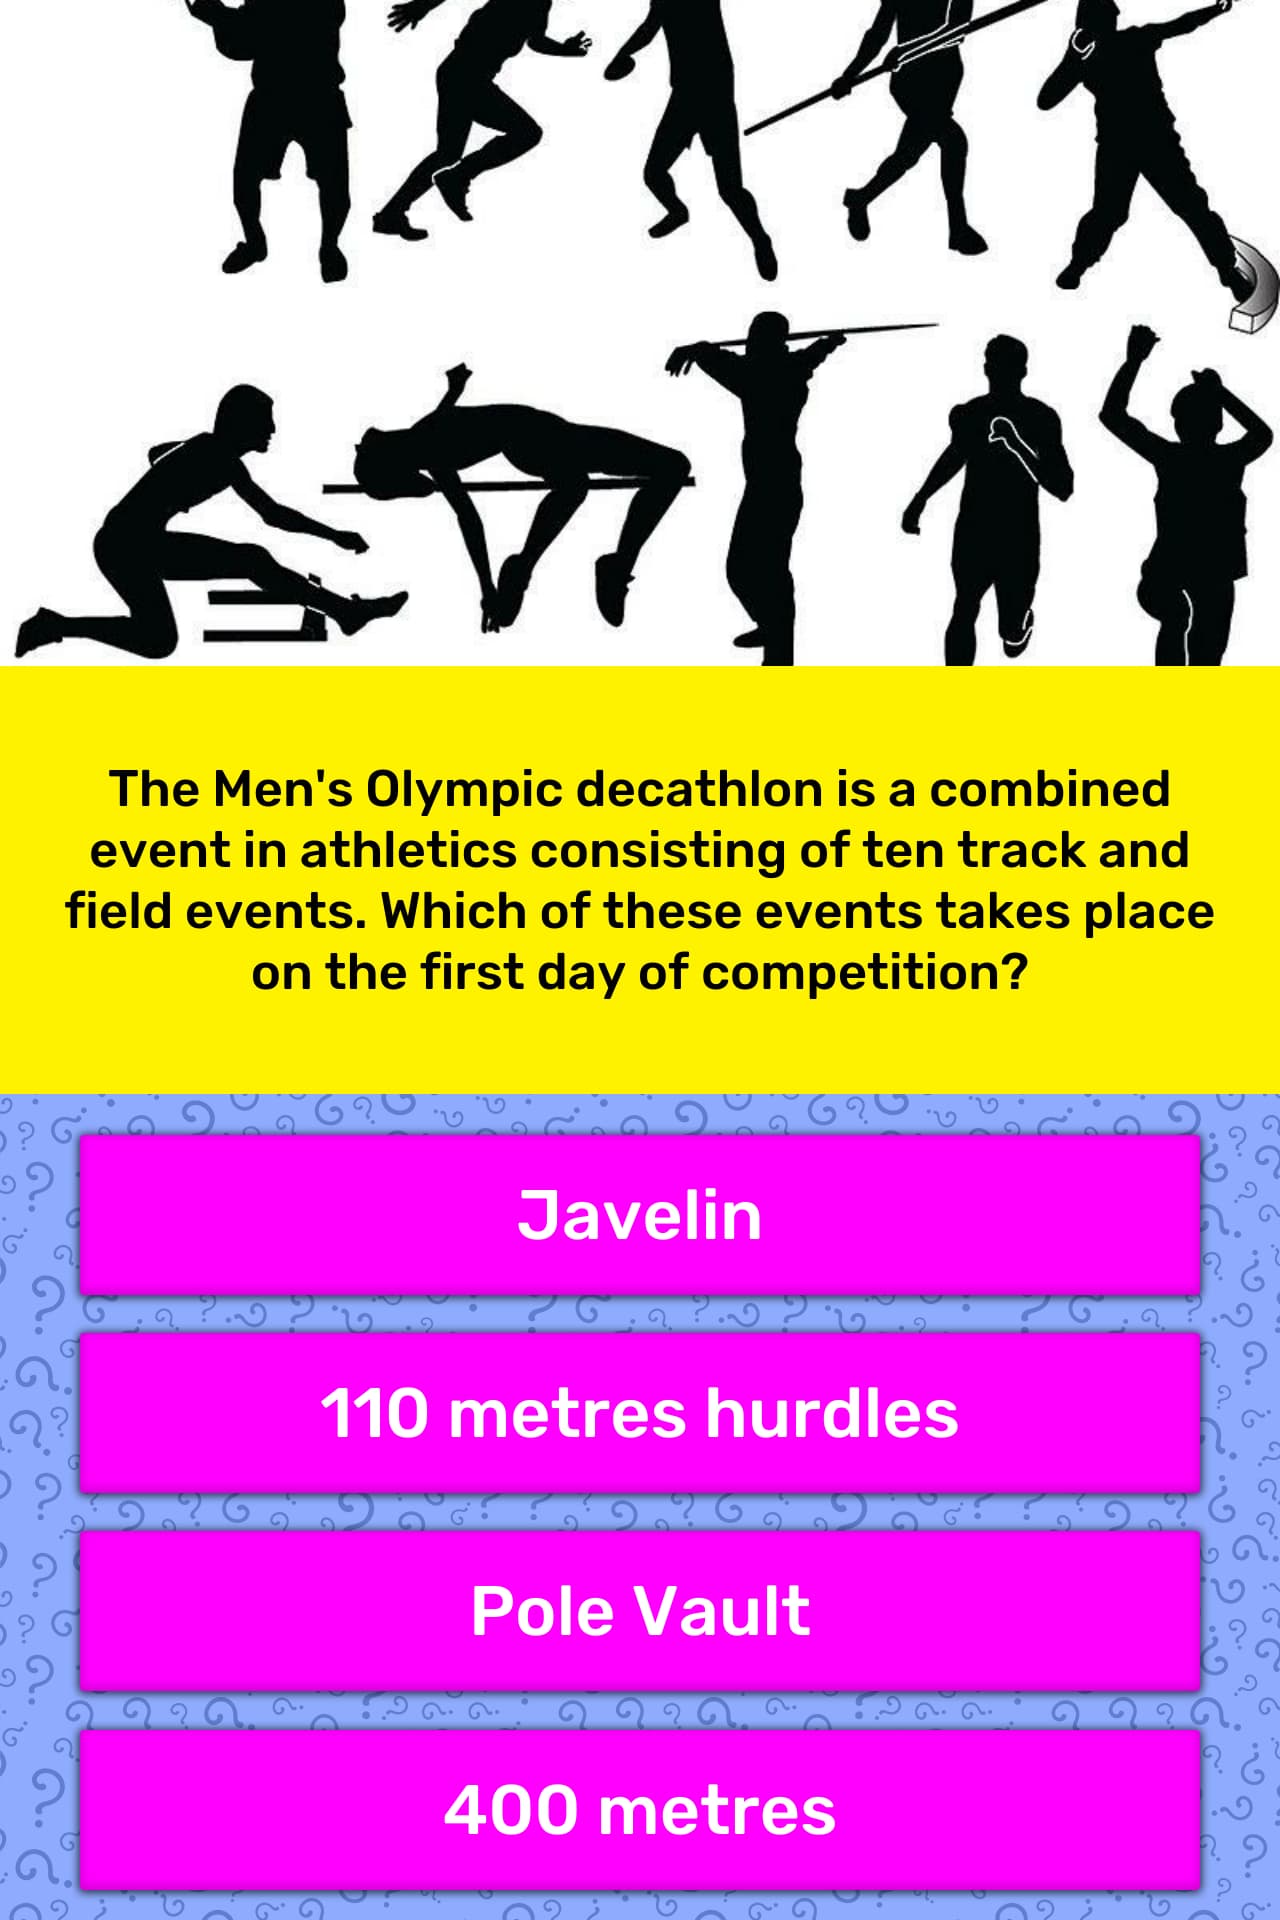 men's decathlon events